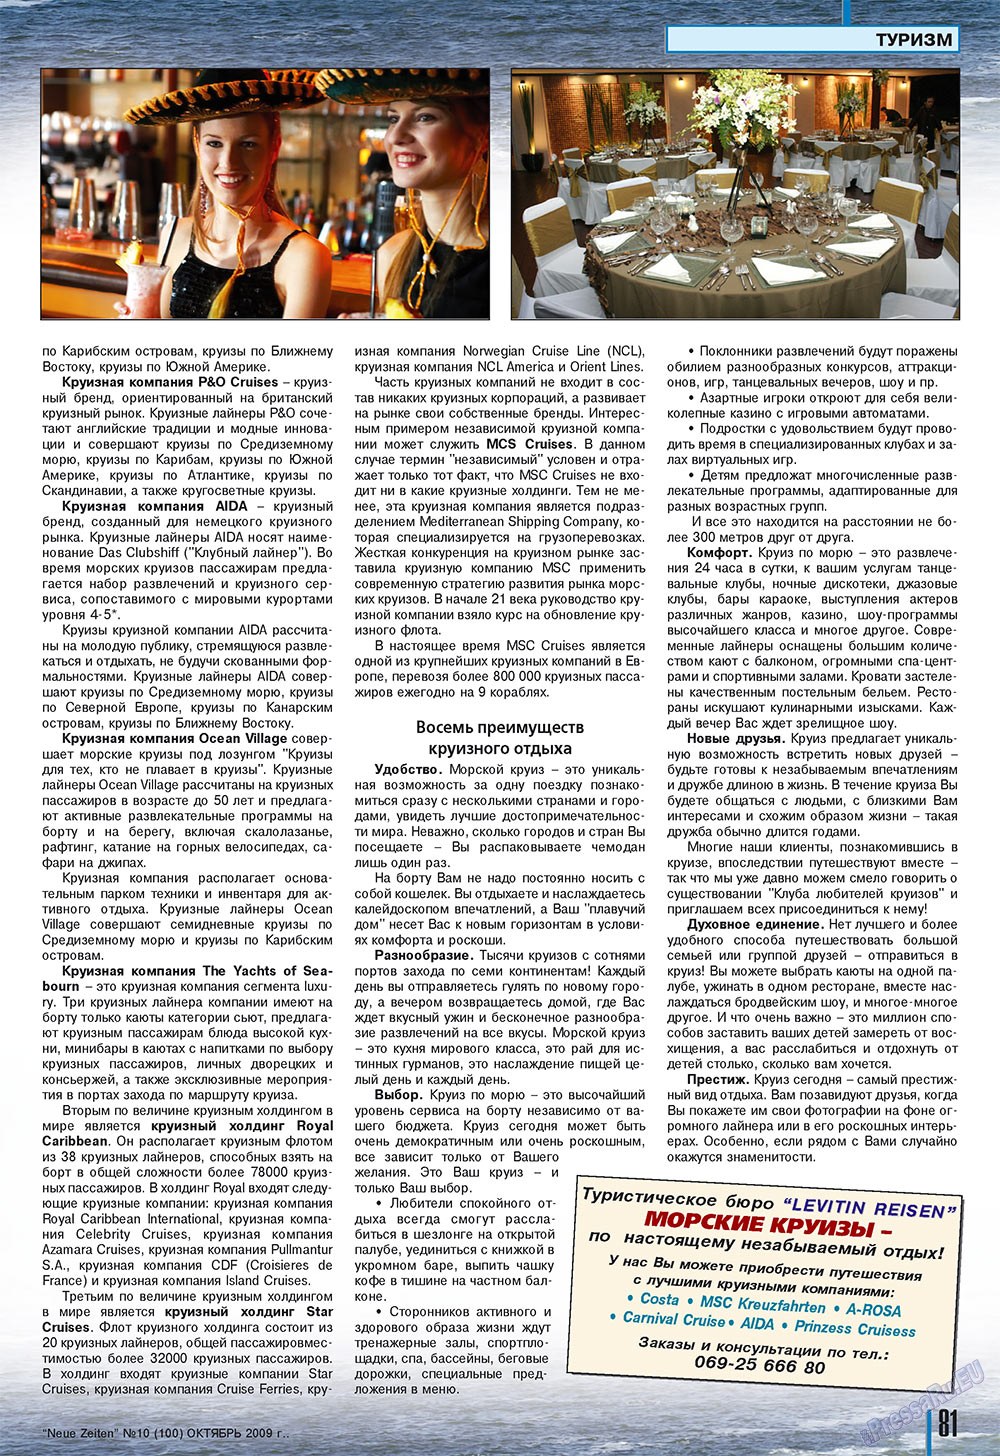 Neue Zeiten (журнал). 2009 год, номер 10, стр. 81